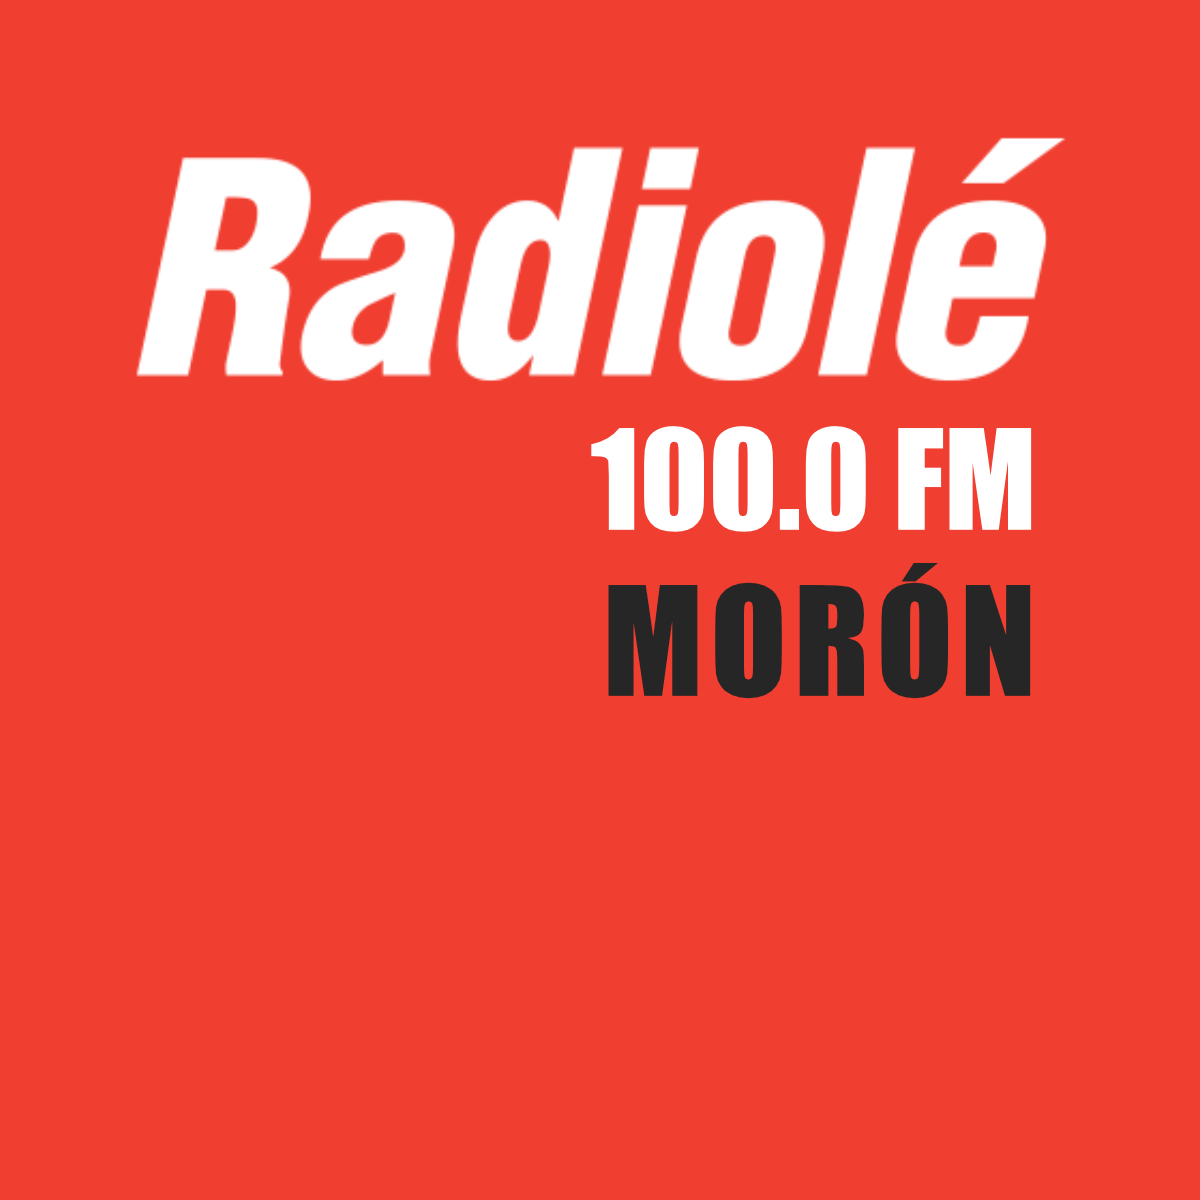 Radiole Moron